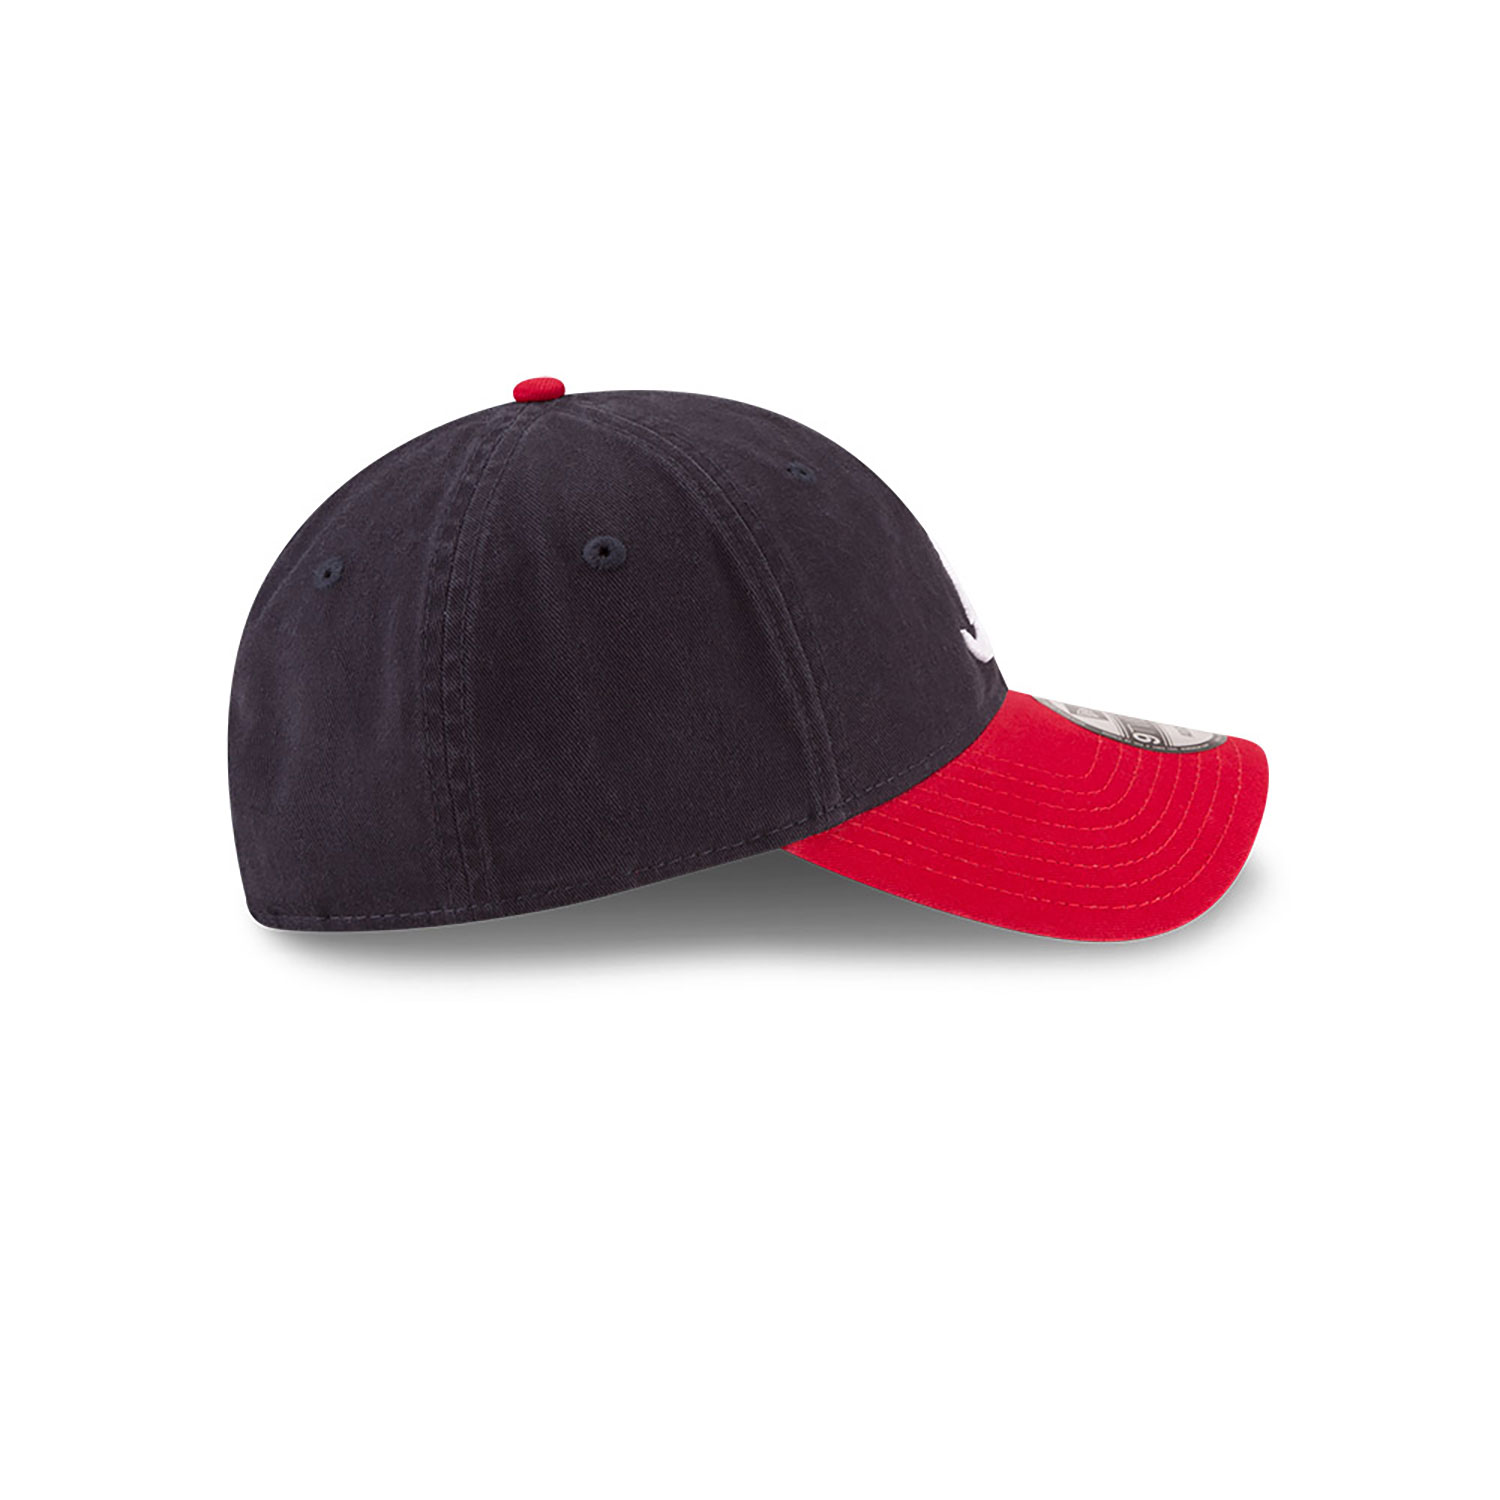 Atlanta Braves MLB Core Classic Navy and Red 9TWENTY Adjustable Cap